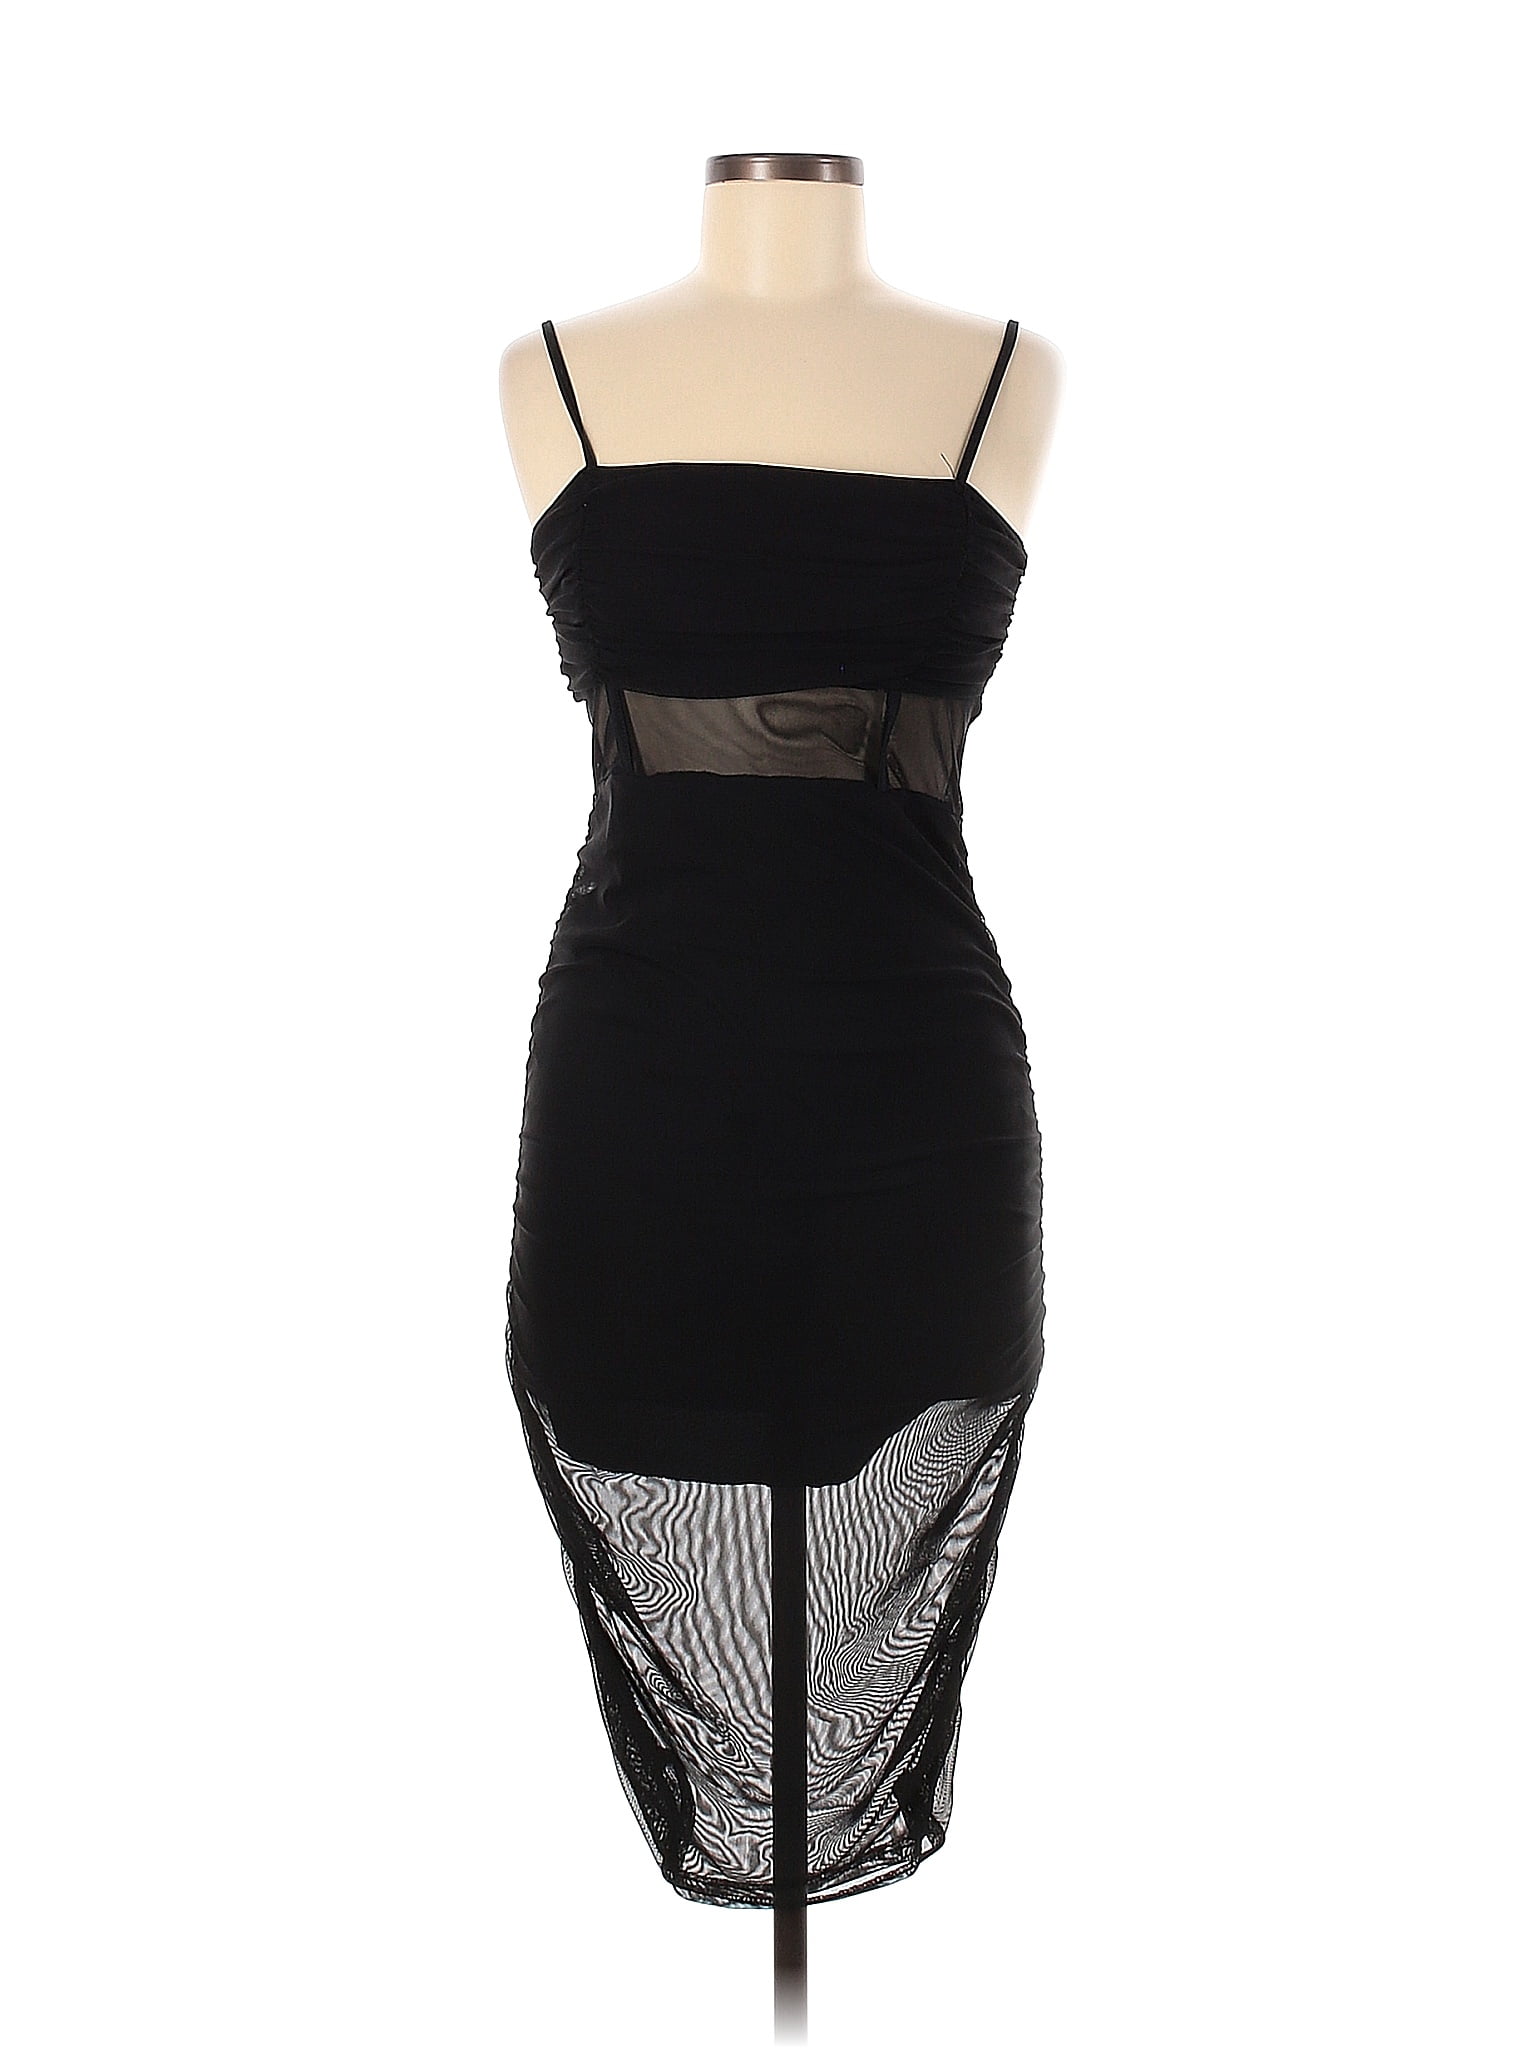 PrettyLittleThing Solid Black Cocktail Dress Size 6 - 80% off | thredUP